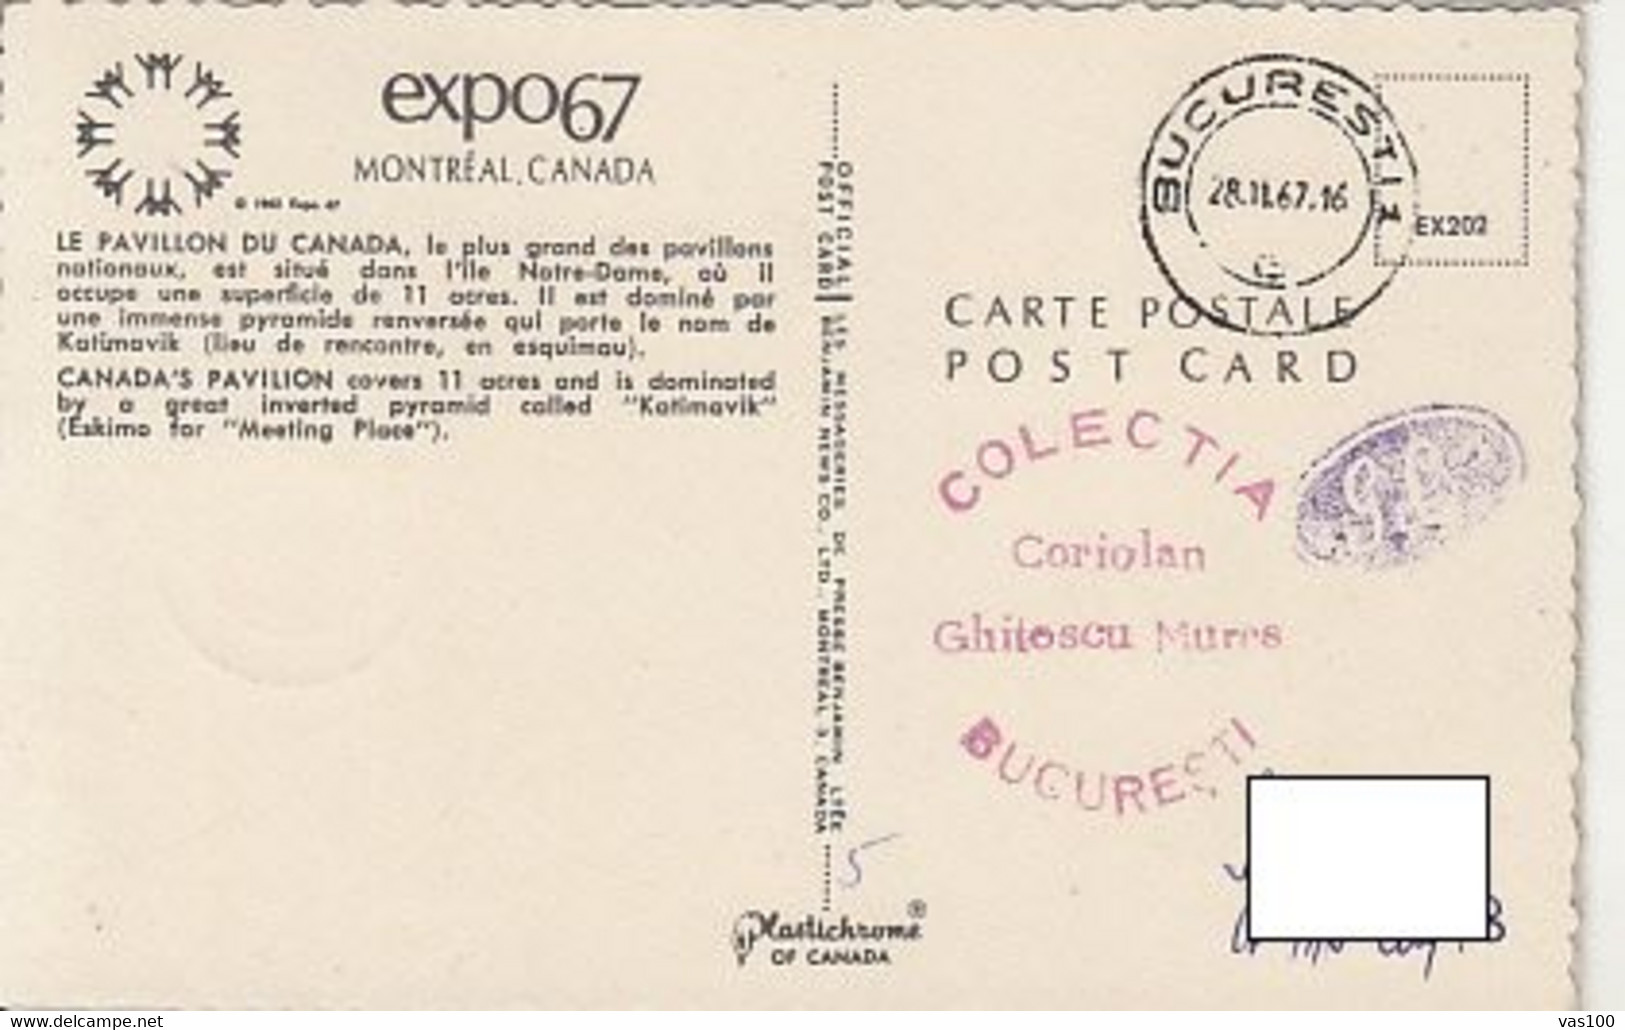 UNIVERSAL EXHIBITIONS, MONTREAL'67, CANADA PAVILION, SPECIAL POSTCARD, 1967, ROMANIA - 1967 – Montreal (Canada)